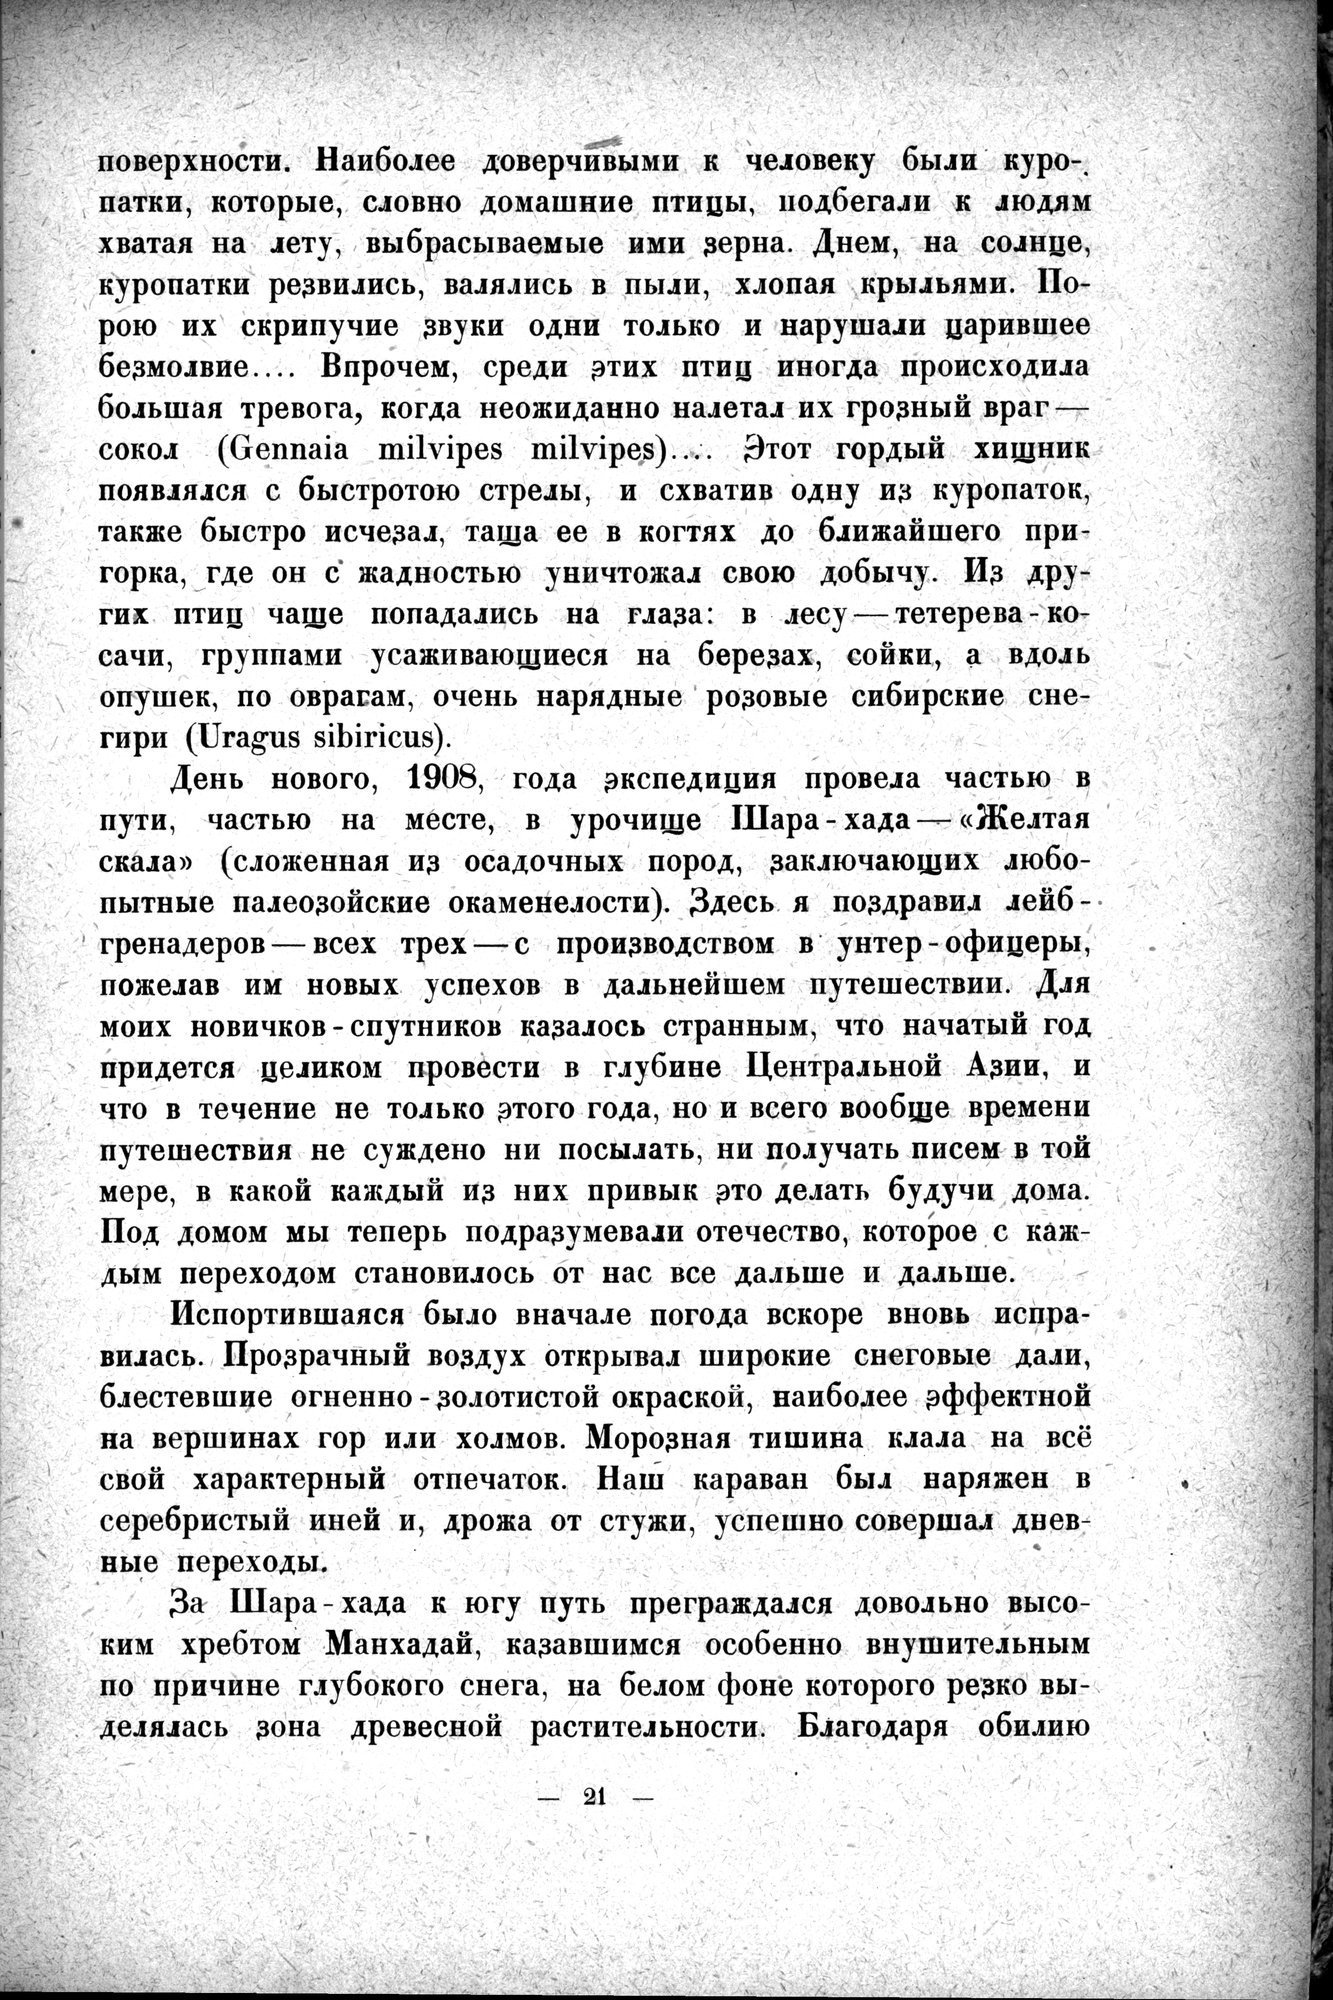 Mongoliya i Amdo i mertby gorod Khara-Khoto : vol.1 / Page 37 (Grayscale High Resolution Image)